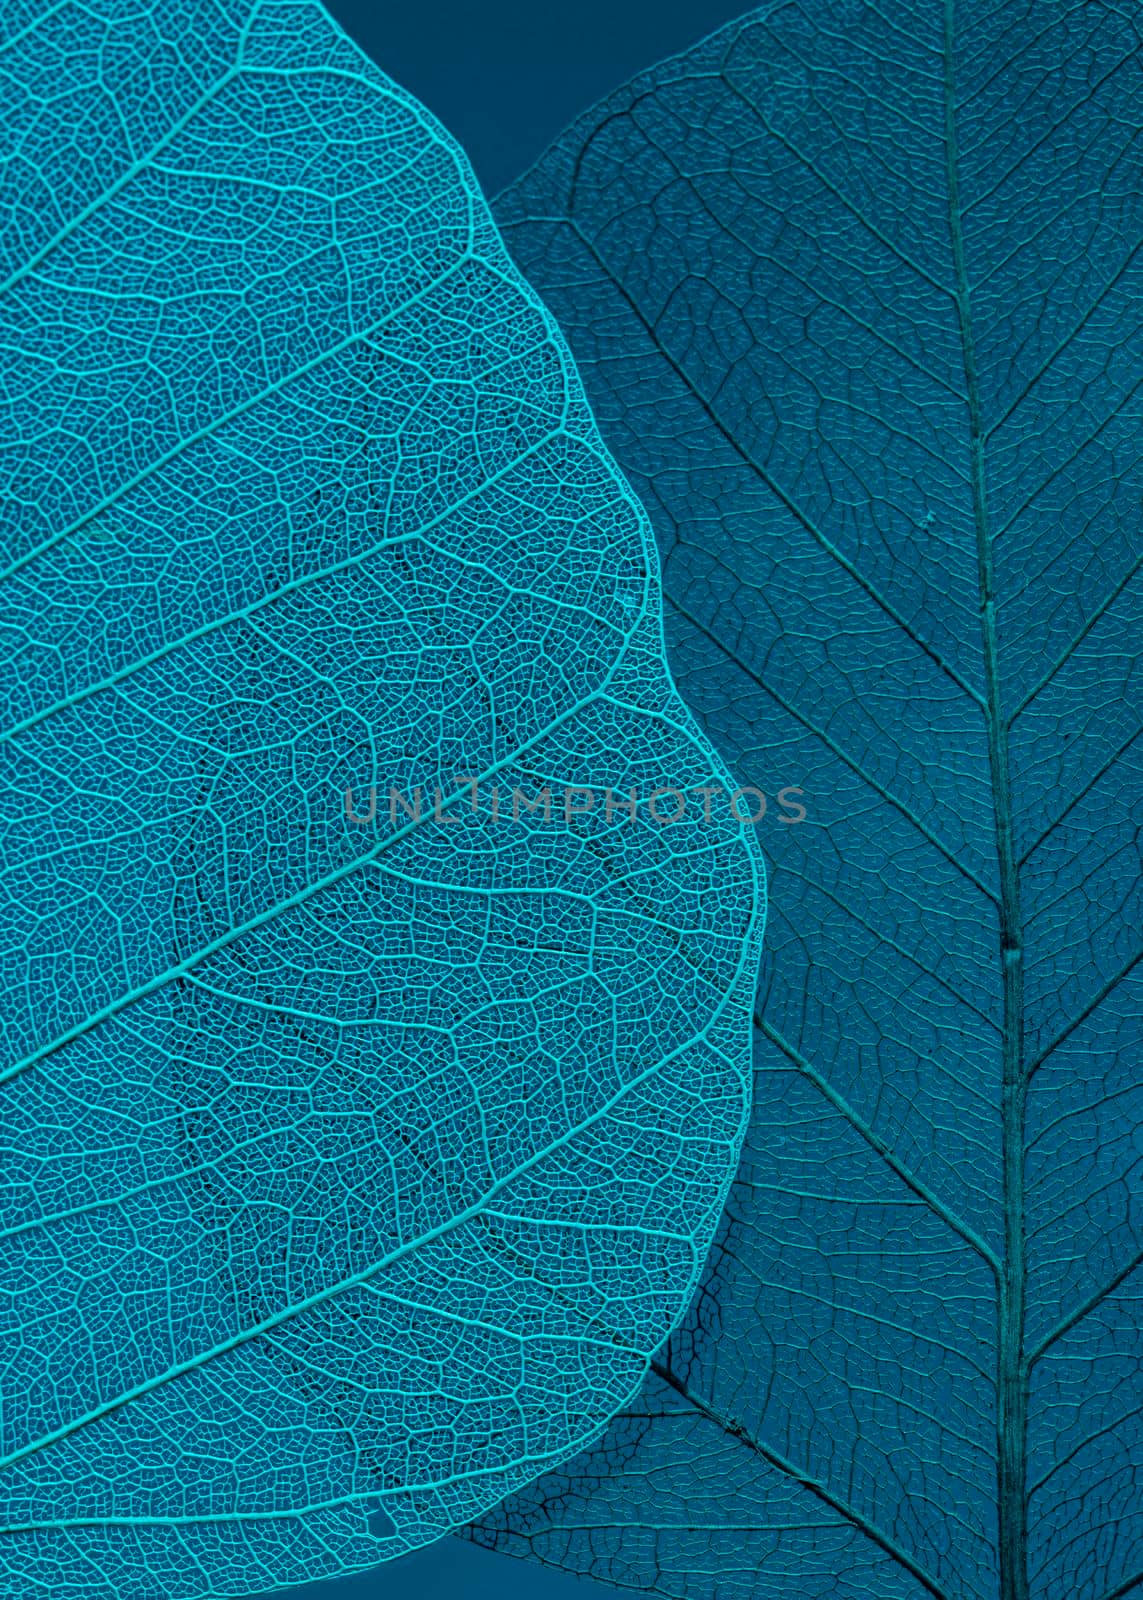 beautiful detailed macro leaf. High quality photo by Zahard